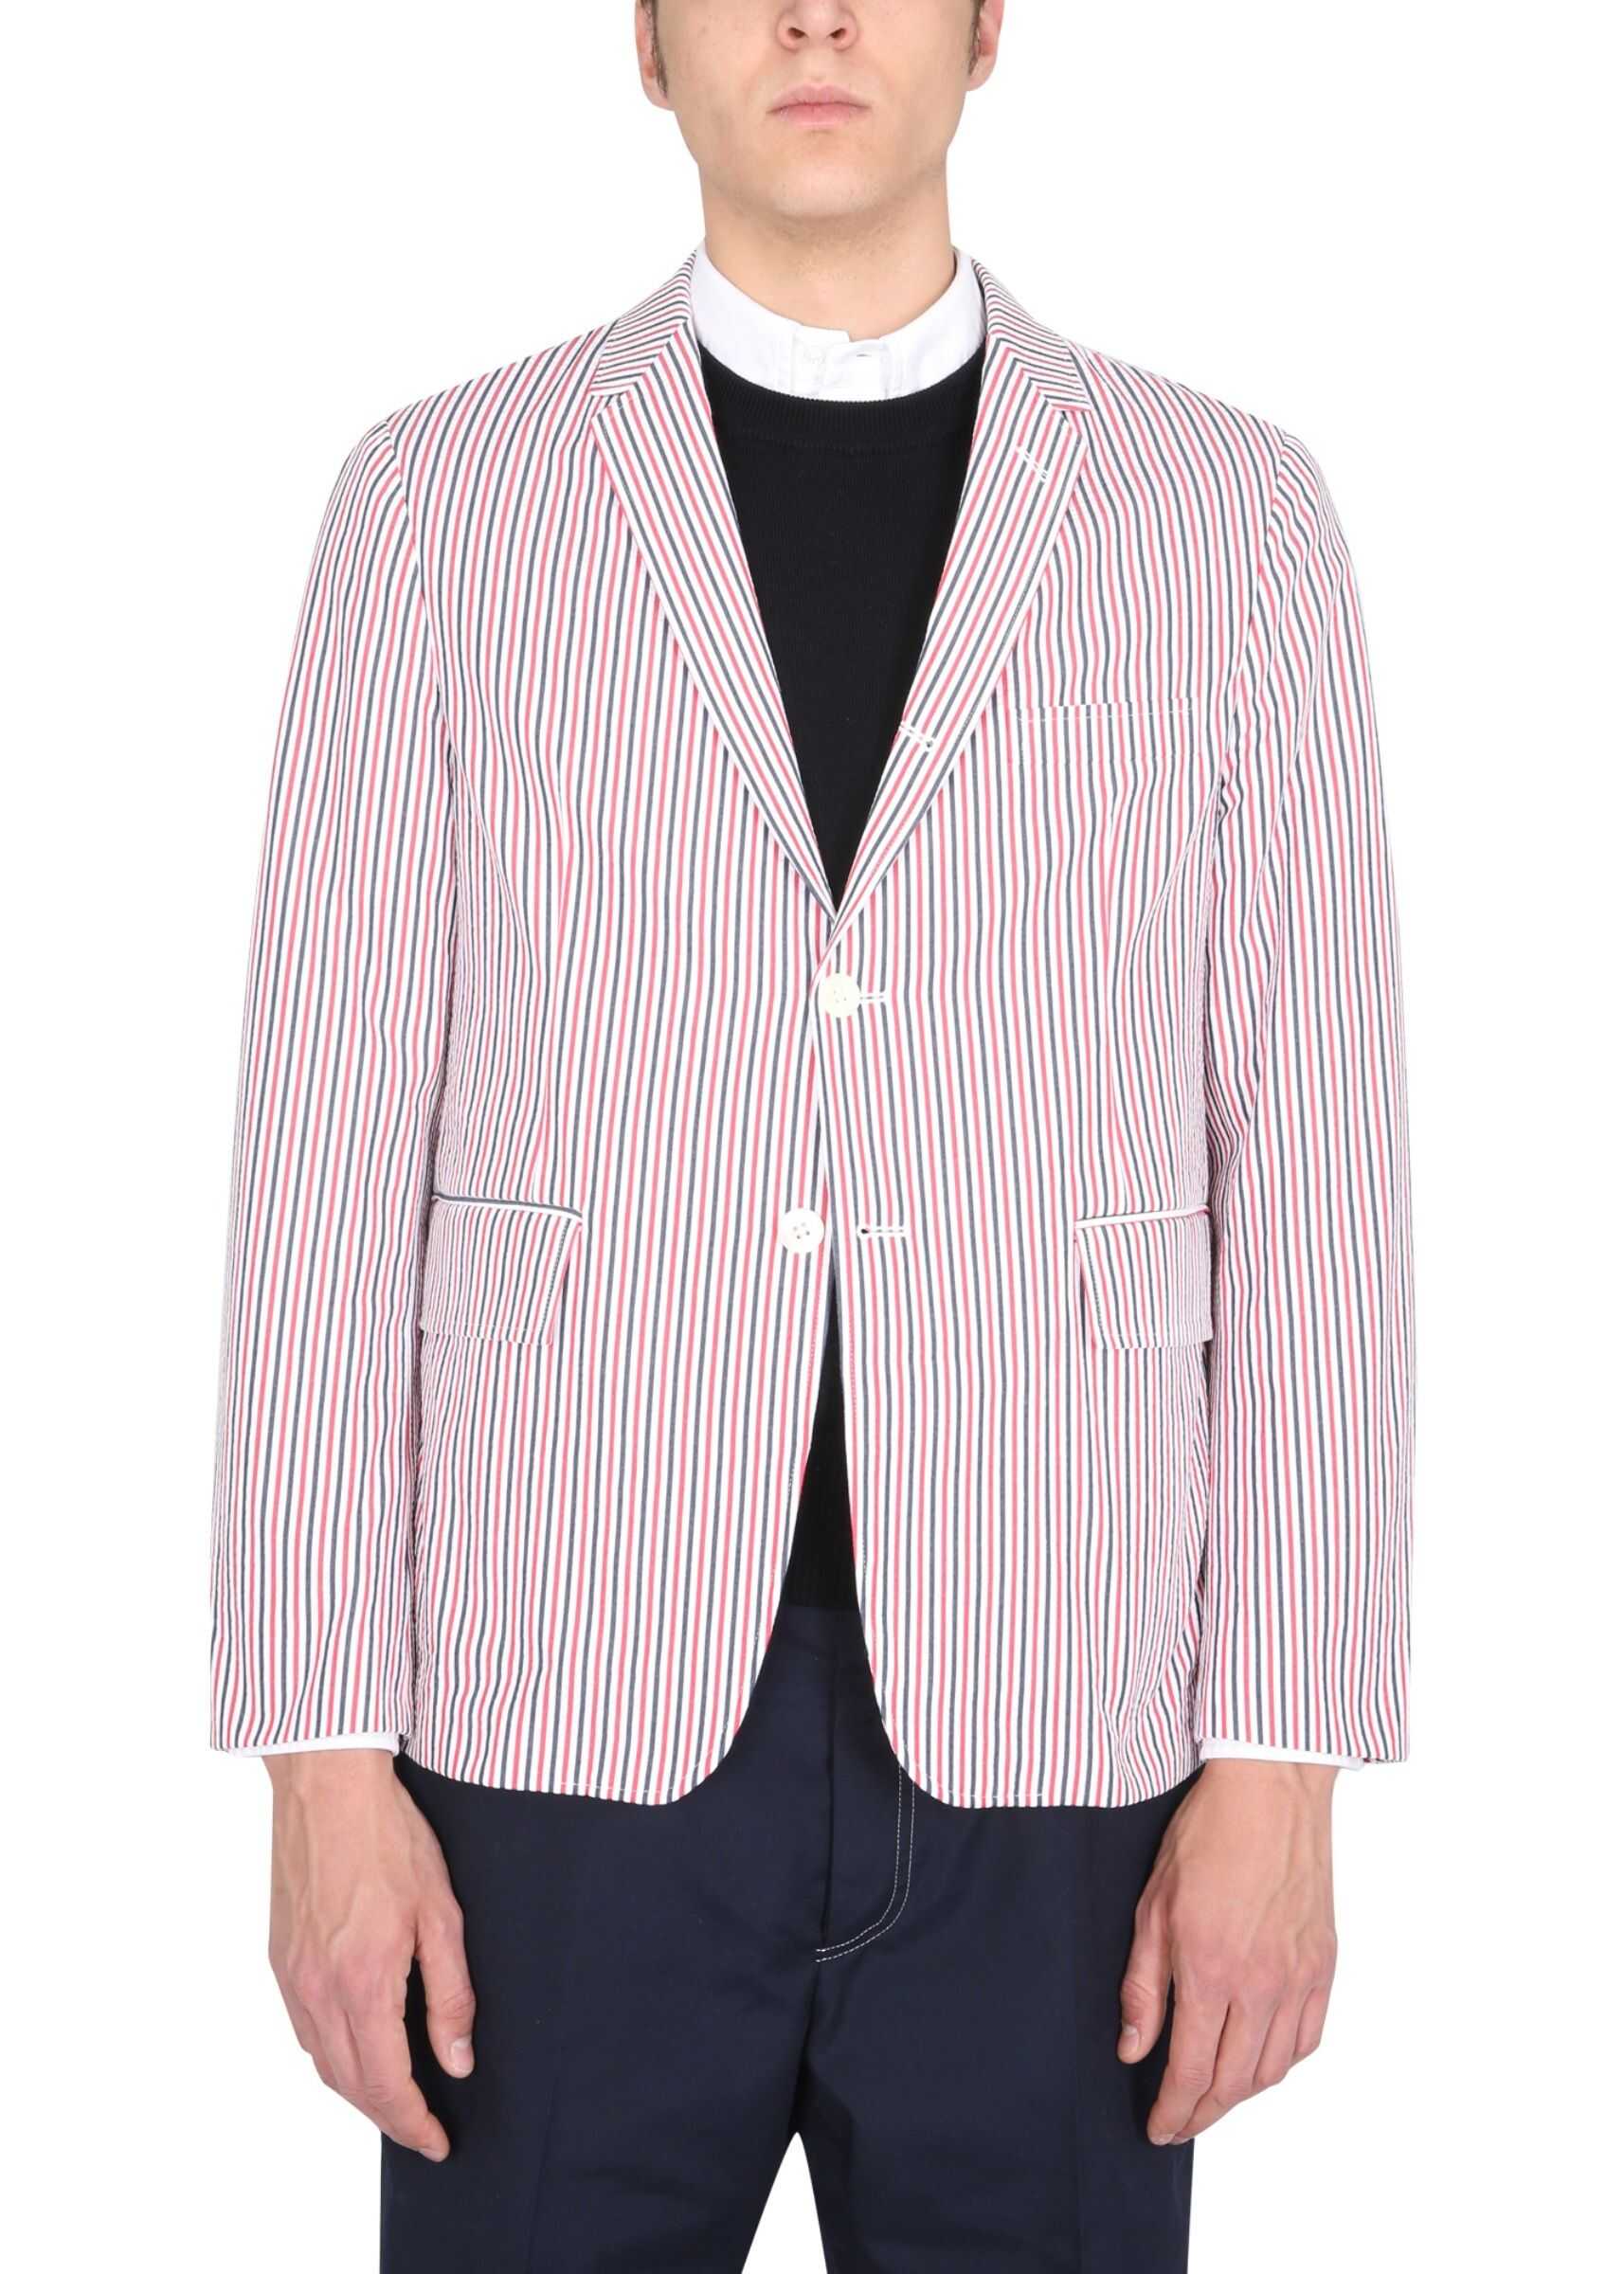 Thom Browne Jacket With Seersucker Stripe Pattern MJU426A_06127960 MULTICOLOUR image0